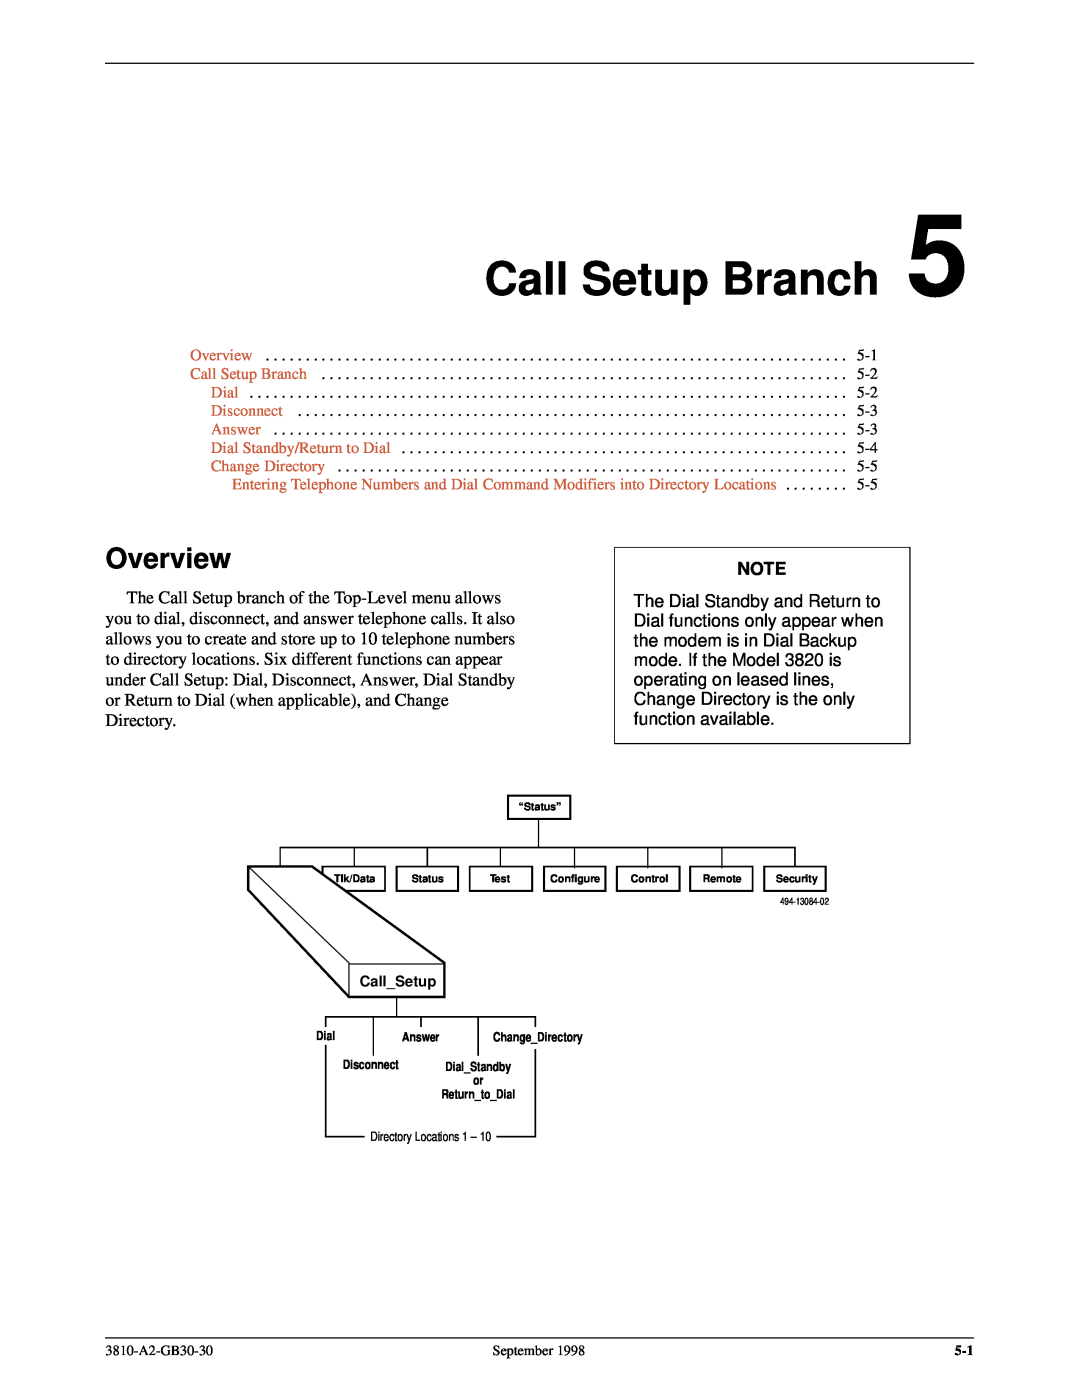 Paradyne 3800 manual Call Setup Branch, Overview, CallSetup 